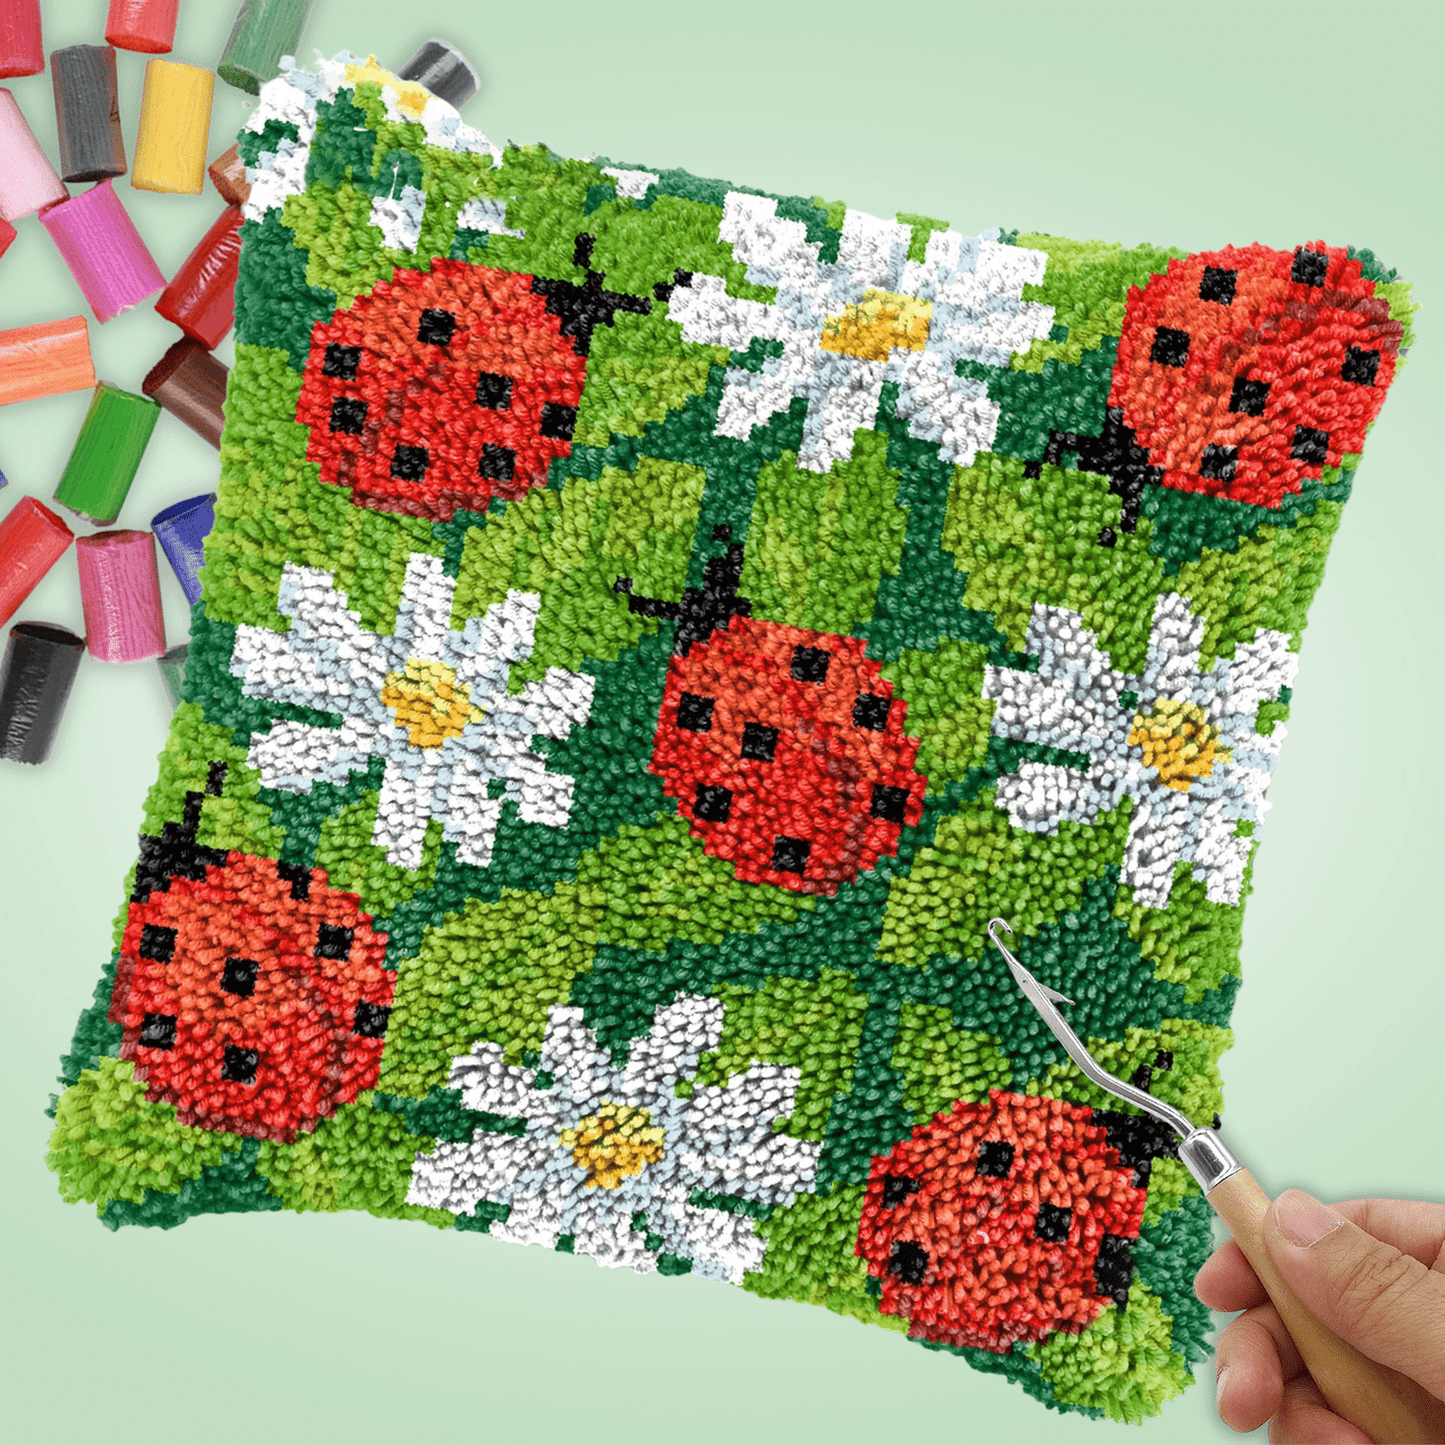 Latch Hook Pillow Making Kit - Ladybug in Flowers